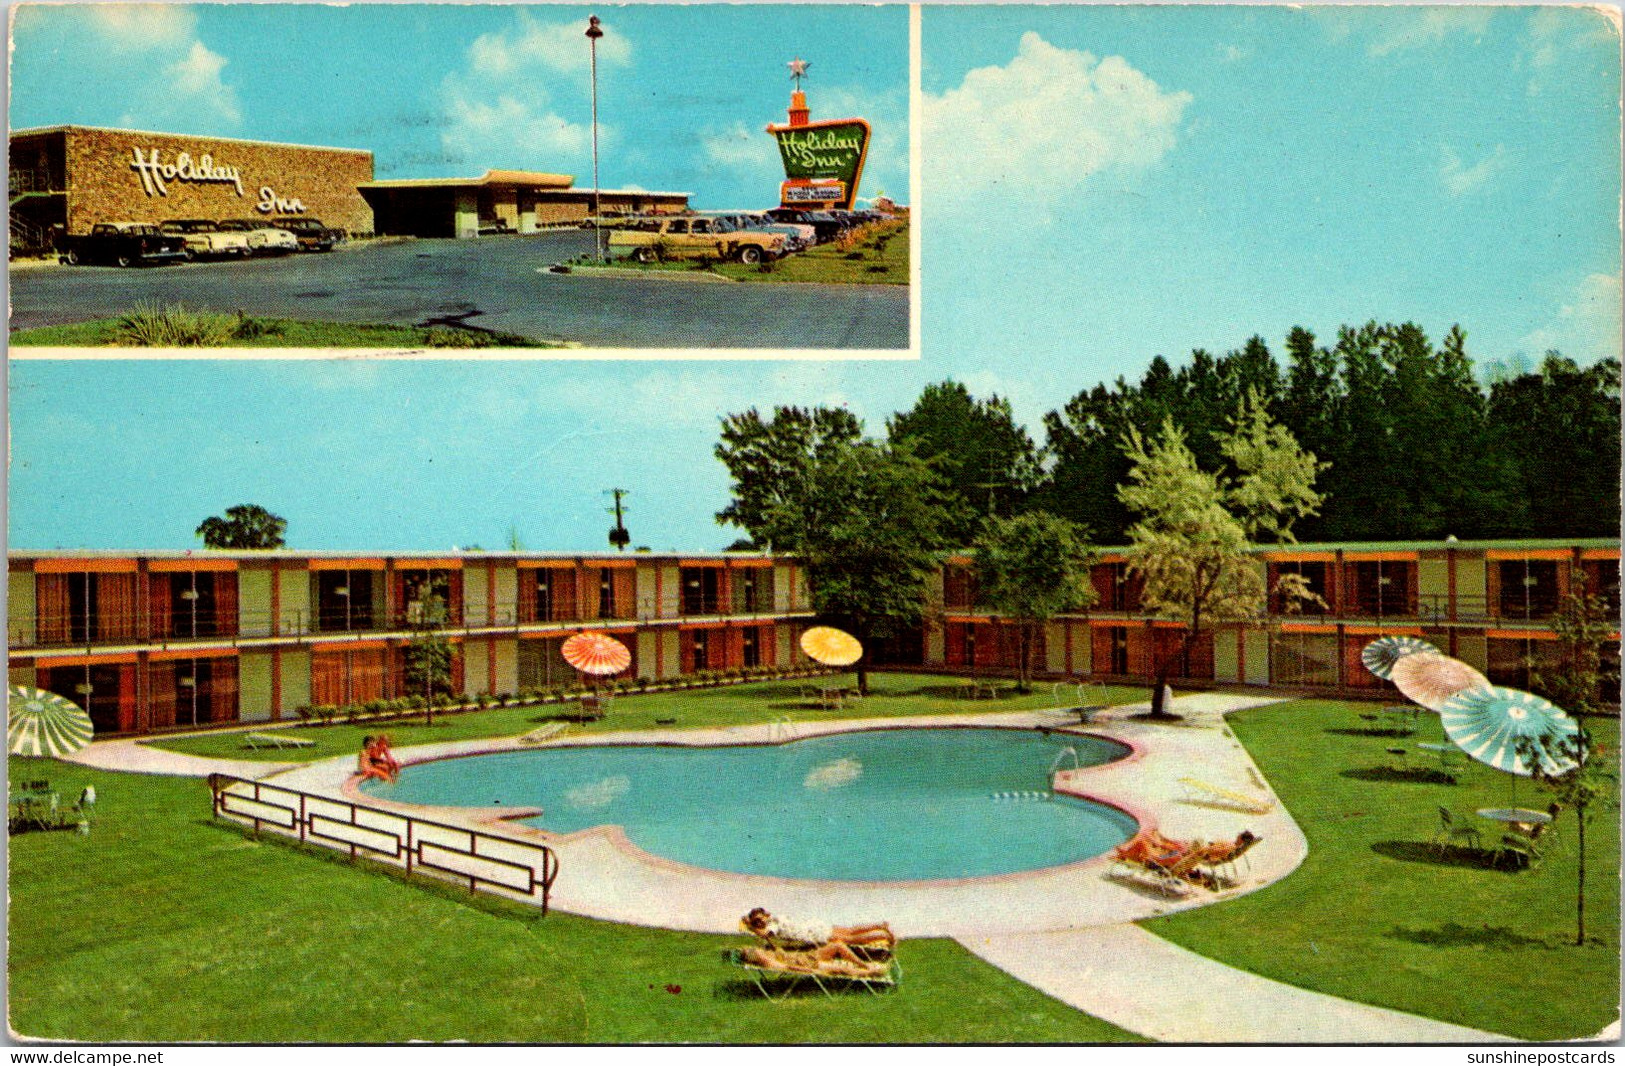 Holiday Inn North Des Moines Iowa 1964 - Des Moines